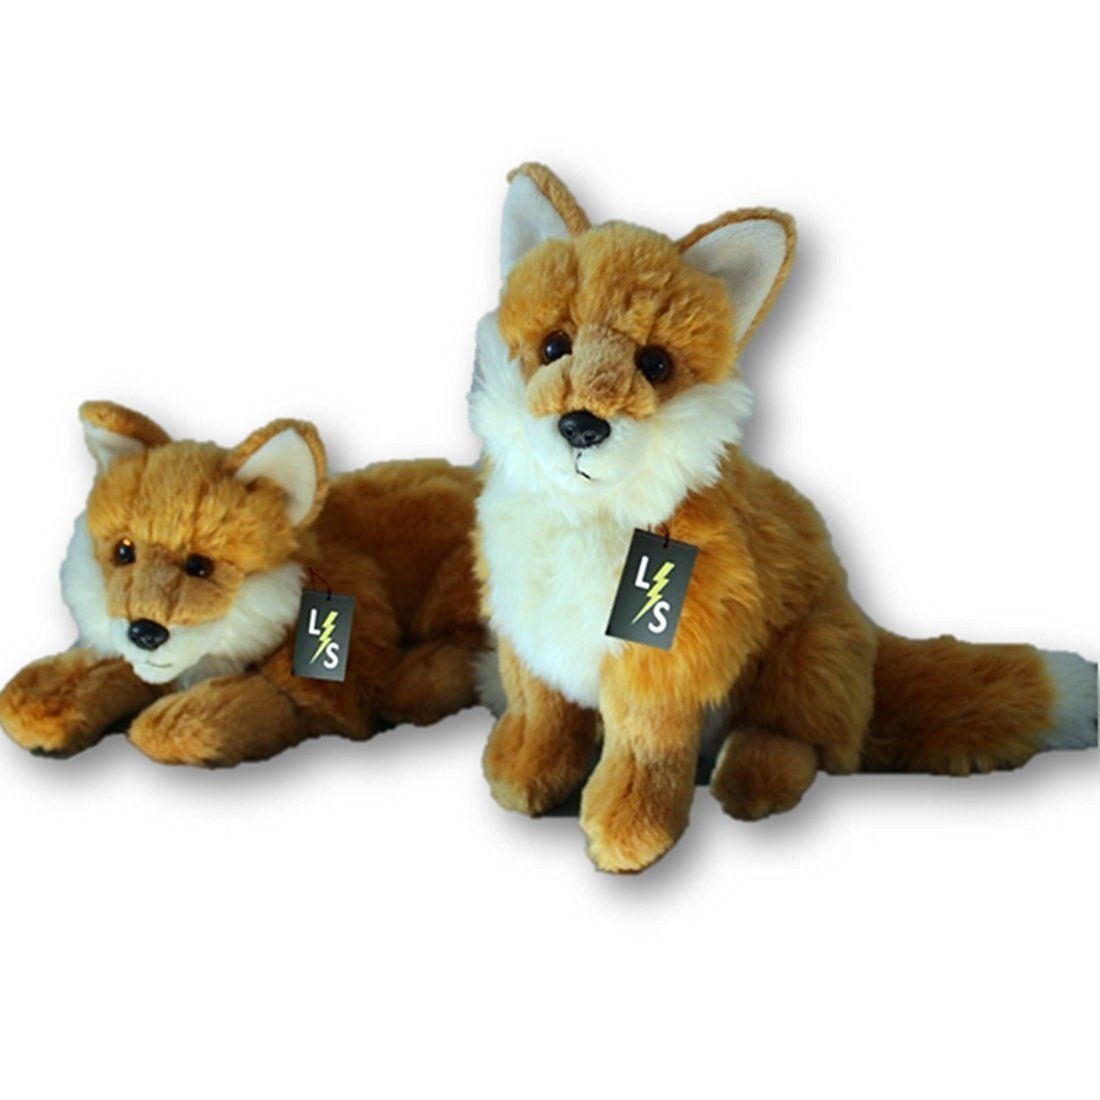 1x Stuffed Animal Soft Plush Kids Toy Sitting Fox Gifts Decor